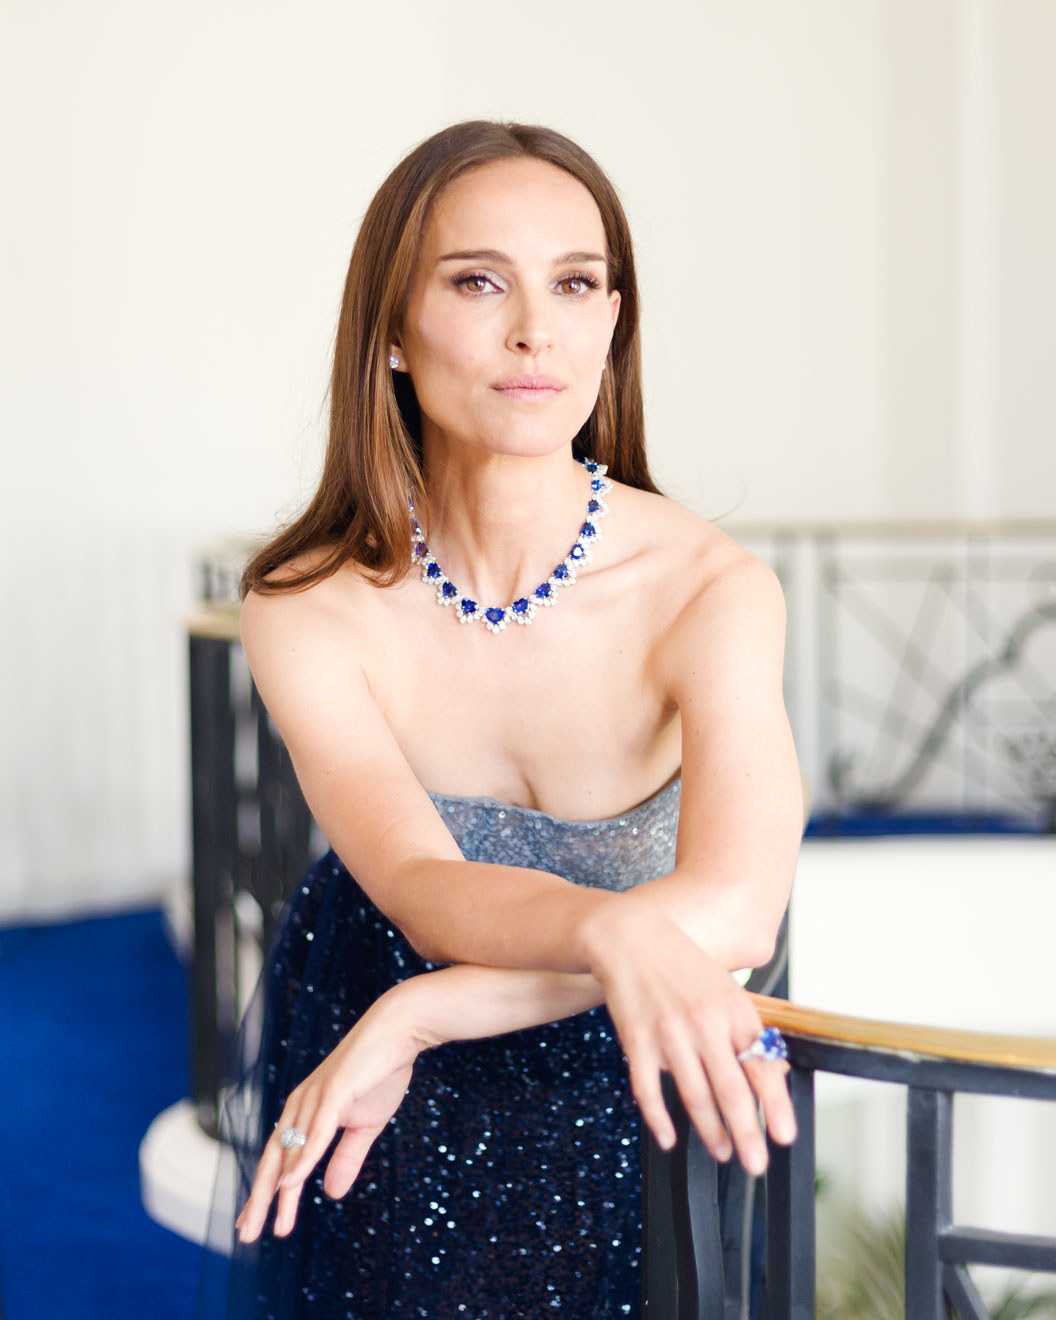 Portrait of Natalie Portman in eveningwear and blue jewellery